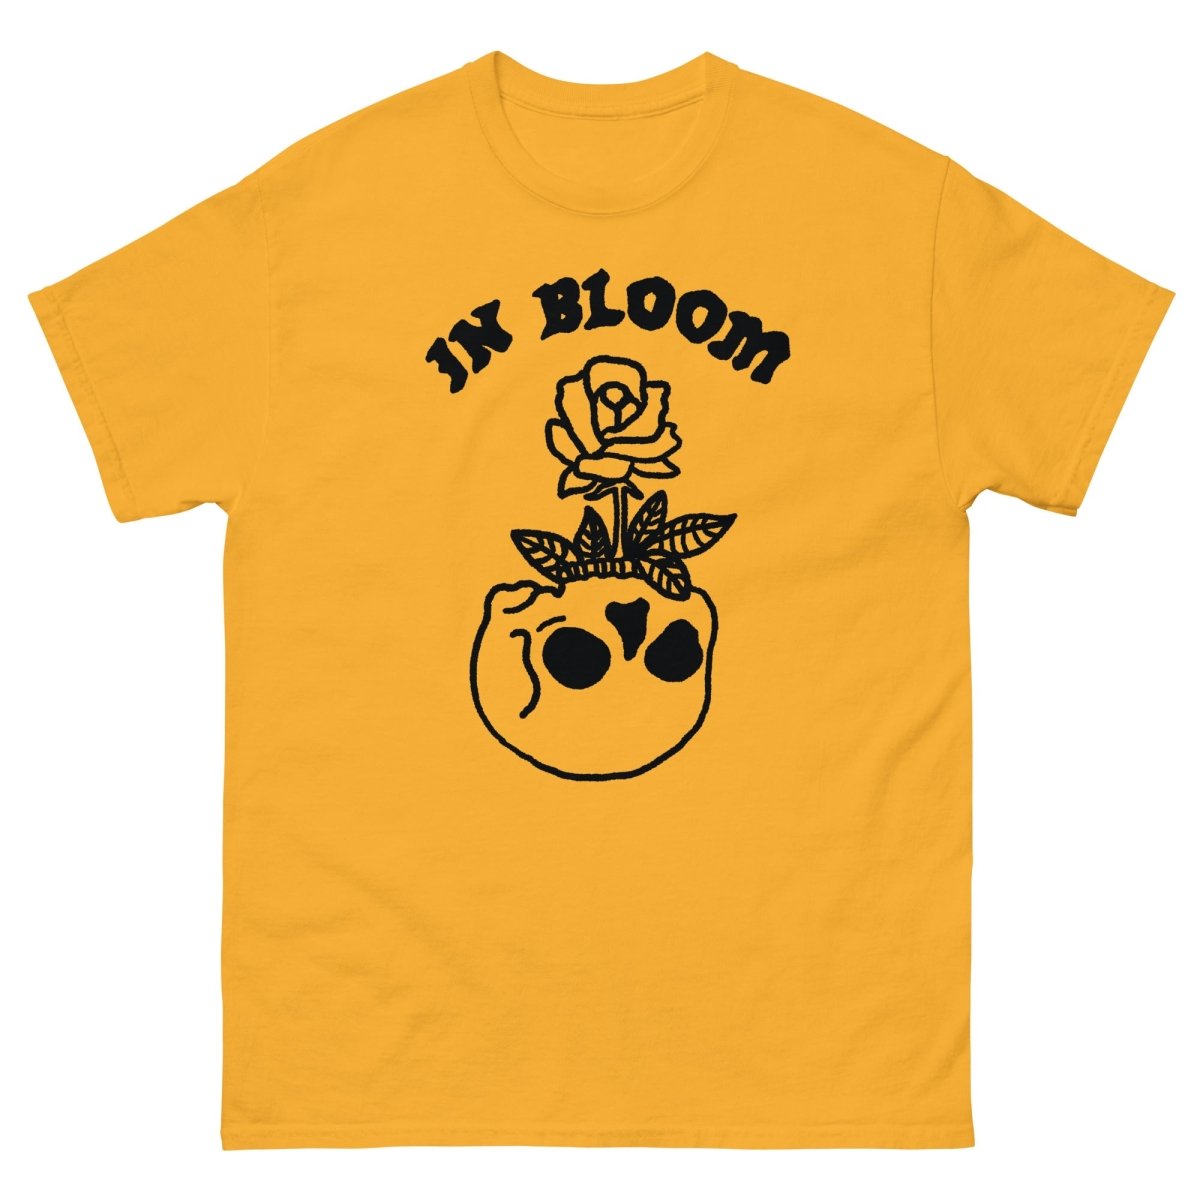 In Bloom classic t-shirt - T-Shirt - Pretty Bad Co.